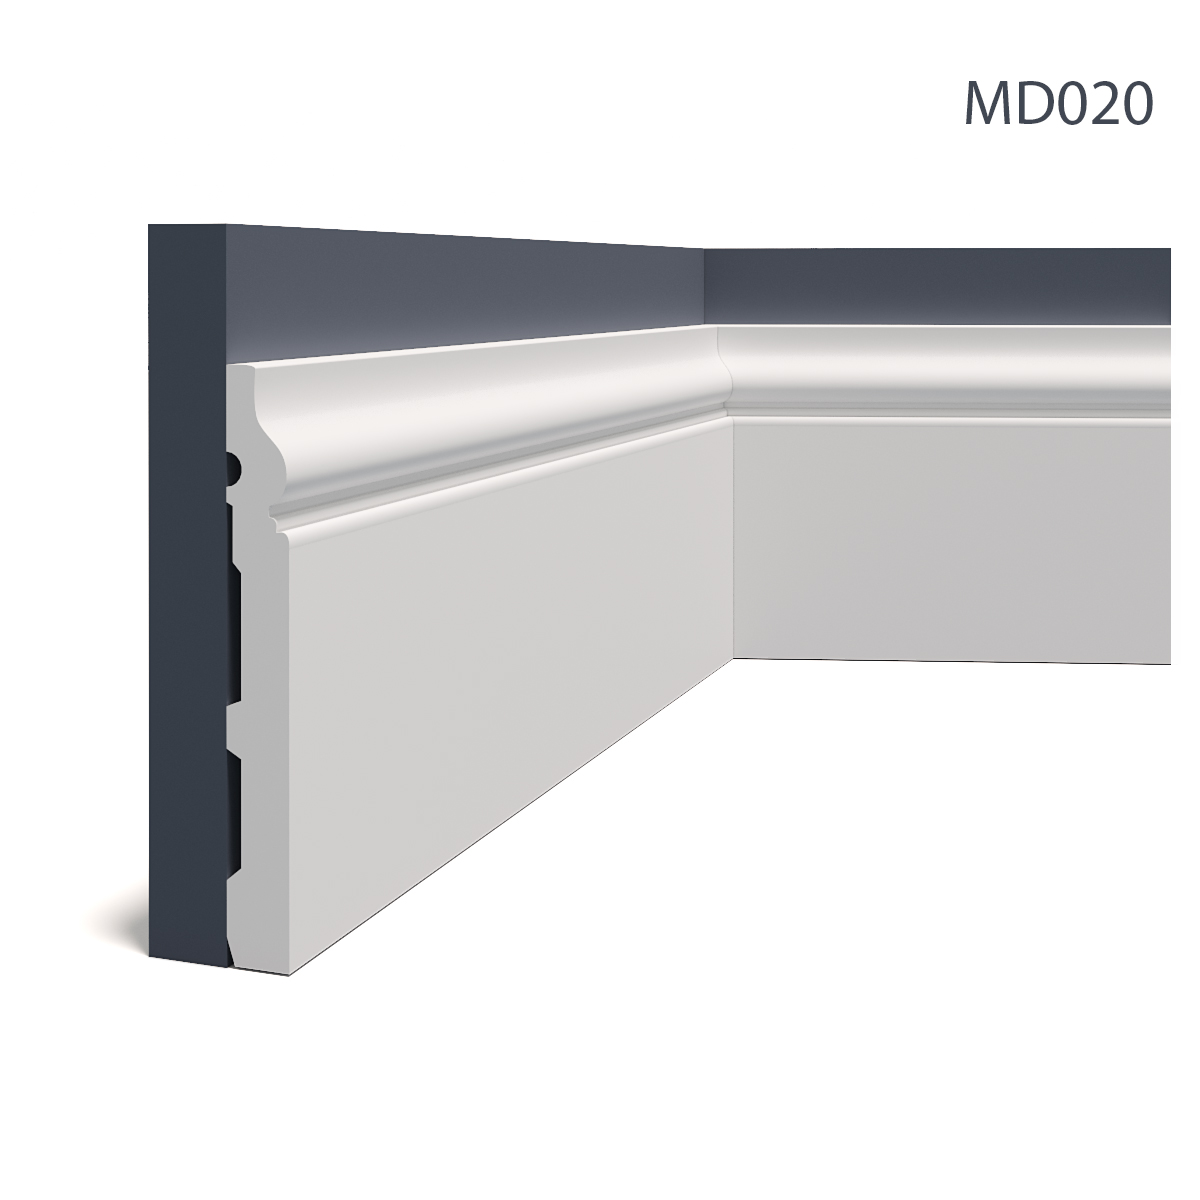 Plinte decorative Mardom Decor MRD-MD020, material: PolyForce